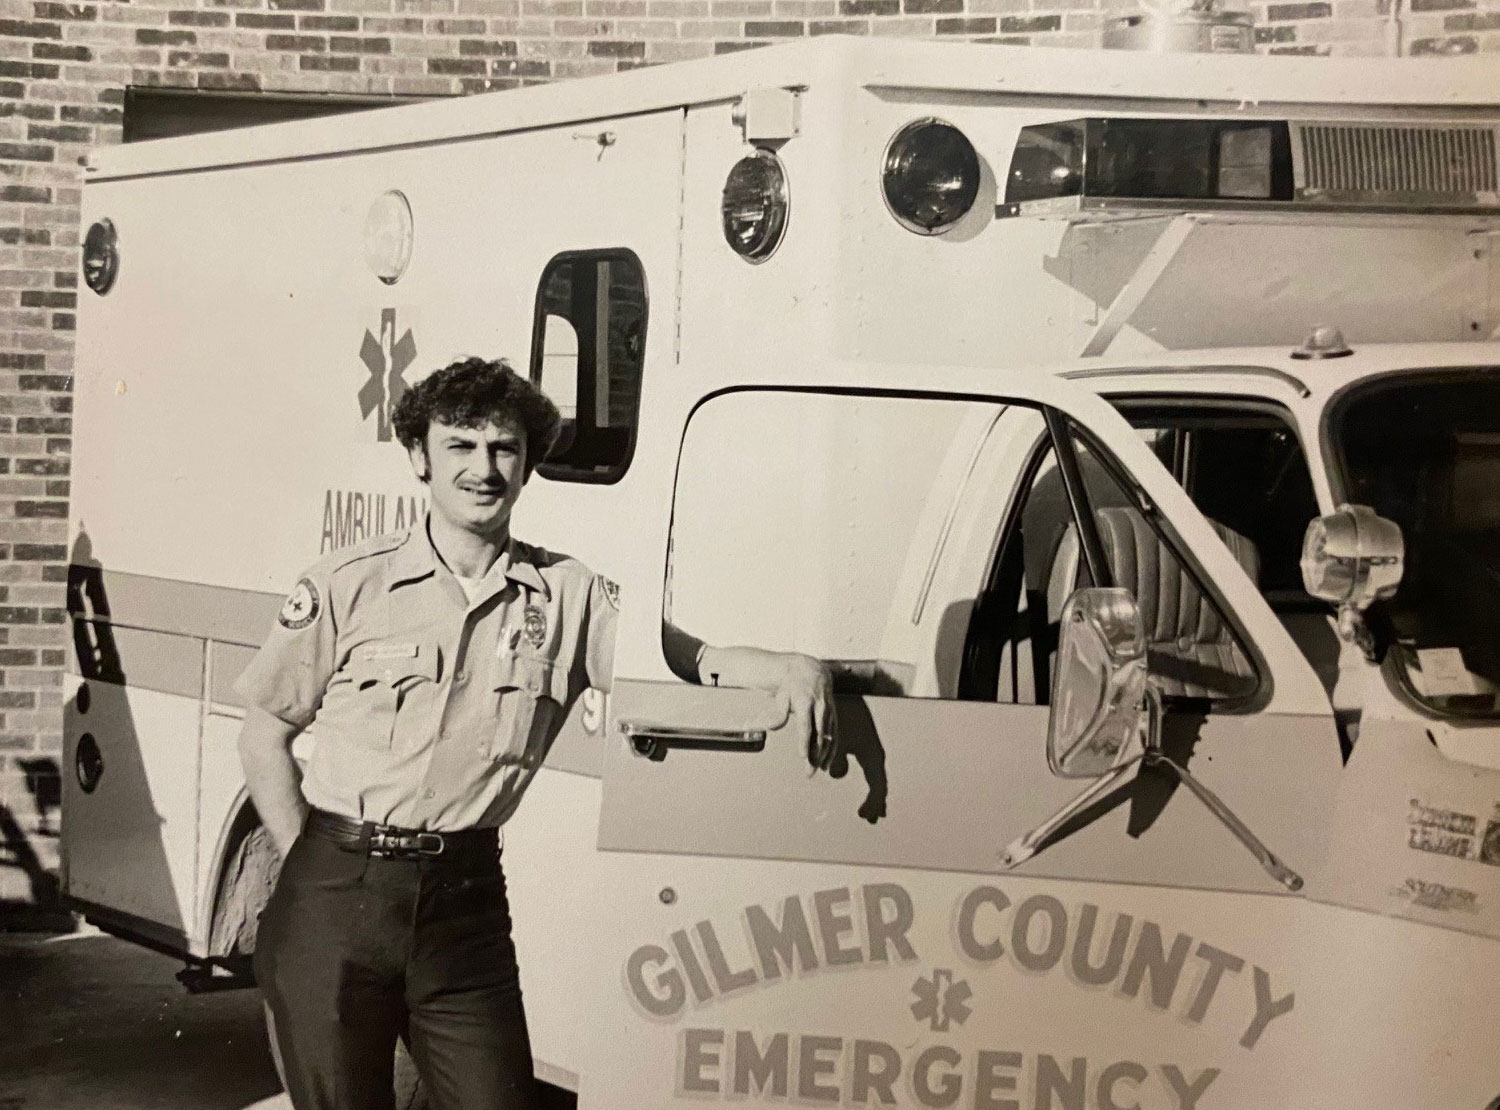 Gary Watkins Gilmer County Fire & Rescue